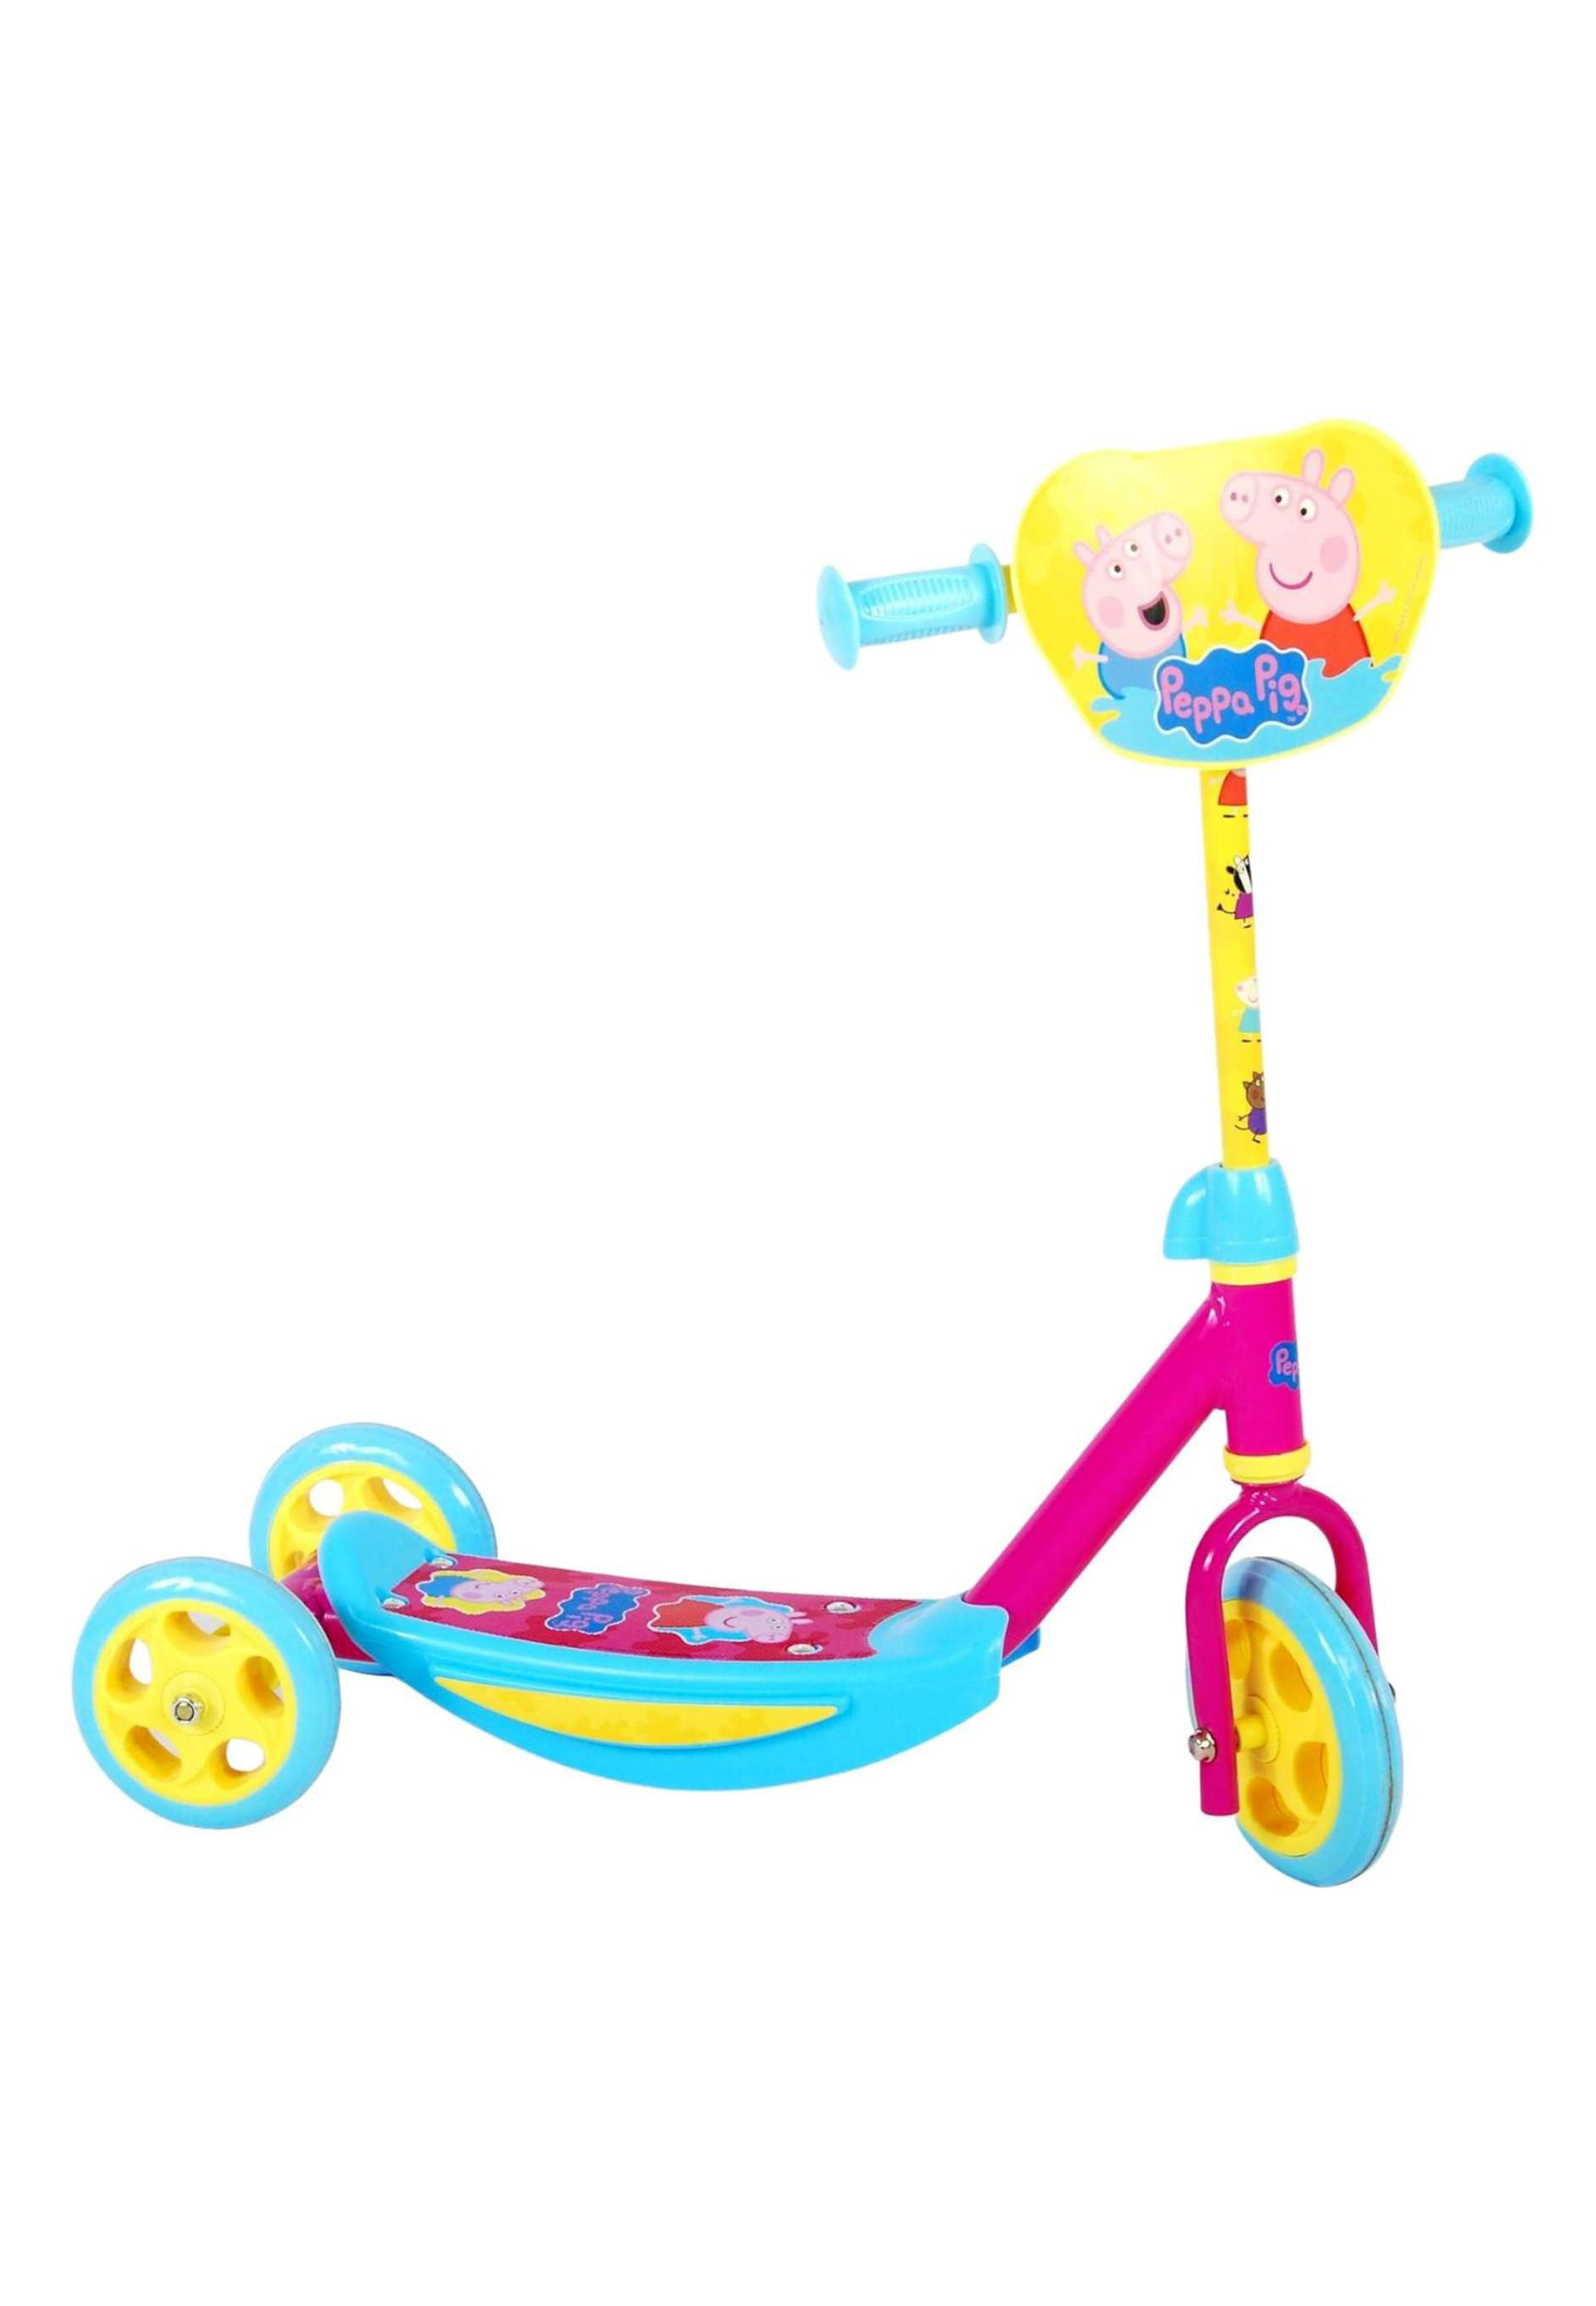 https://cdn02.plentymarkets.com/hztm7t8kkg40/item/images/3286/full/Peppa-Wutz-Pig-Kinder-Roller-Tretroller-Dreirad-Scooter1-3286.jpg